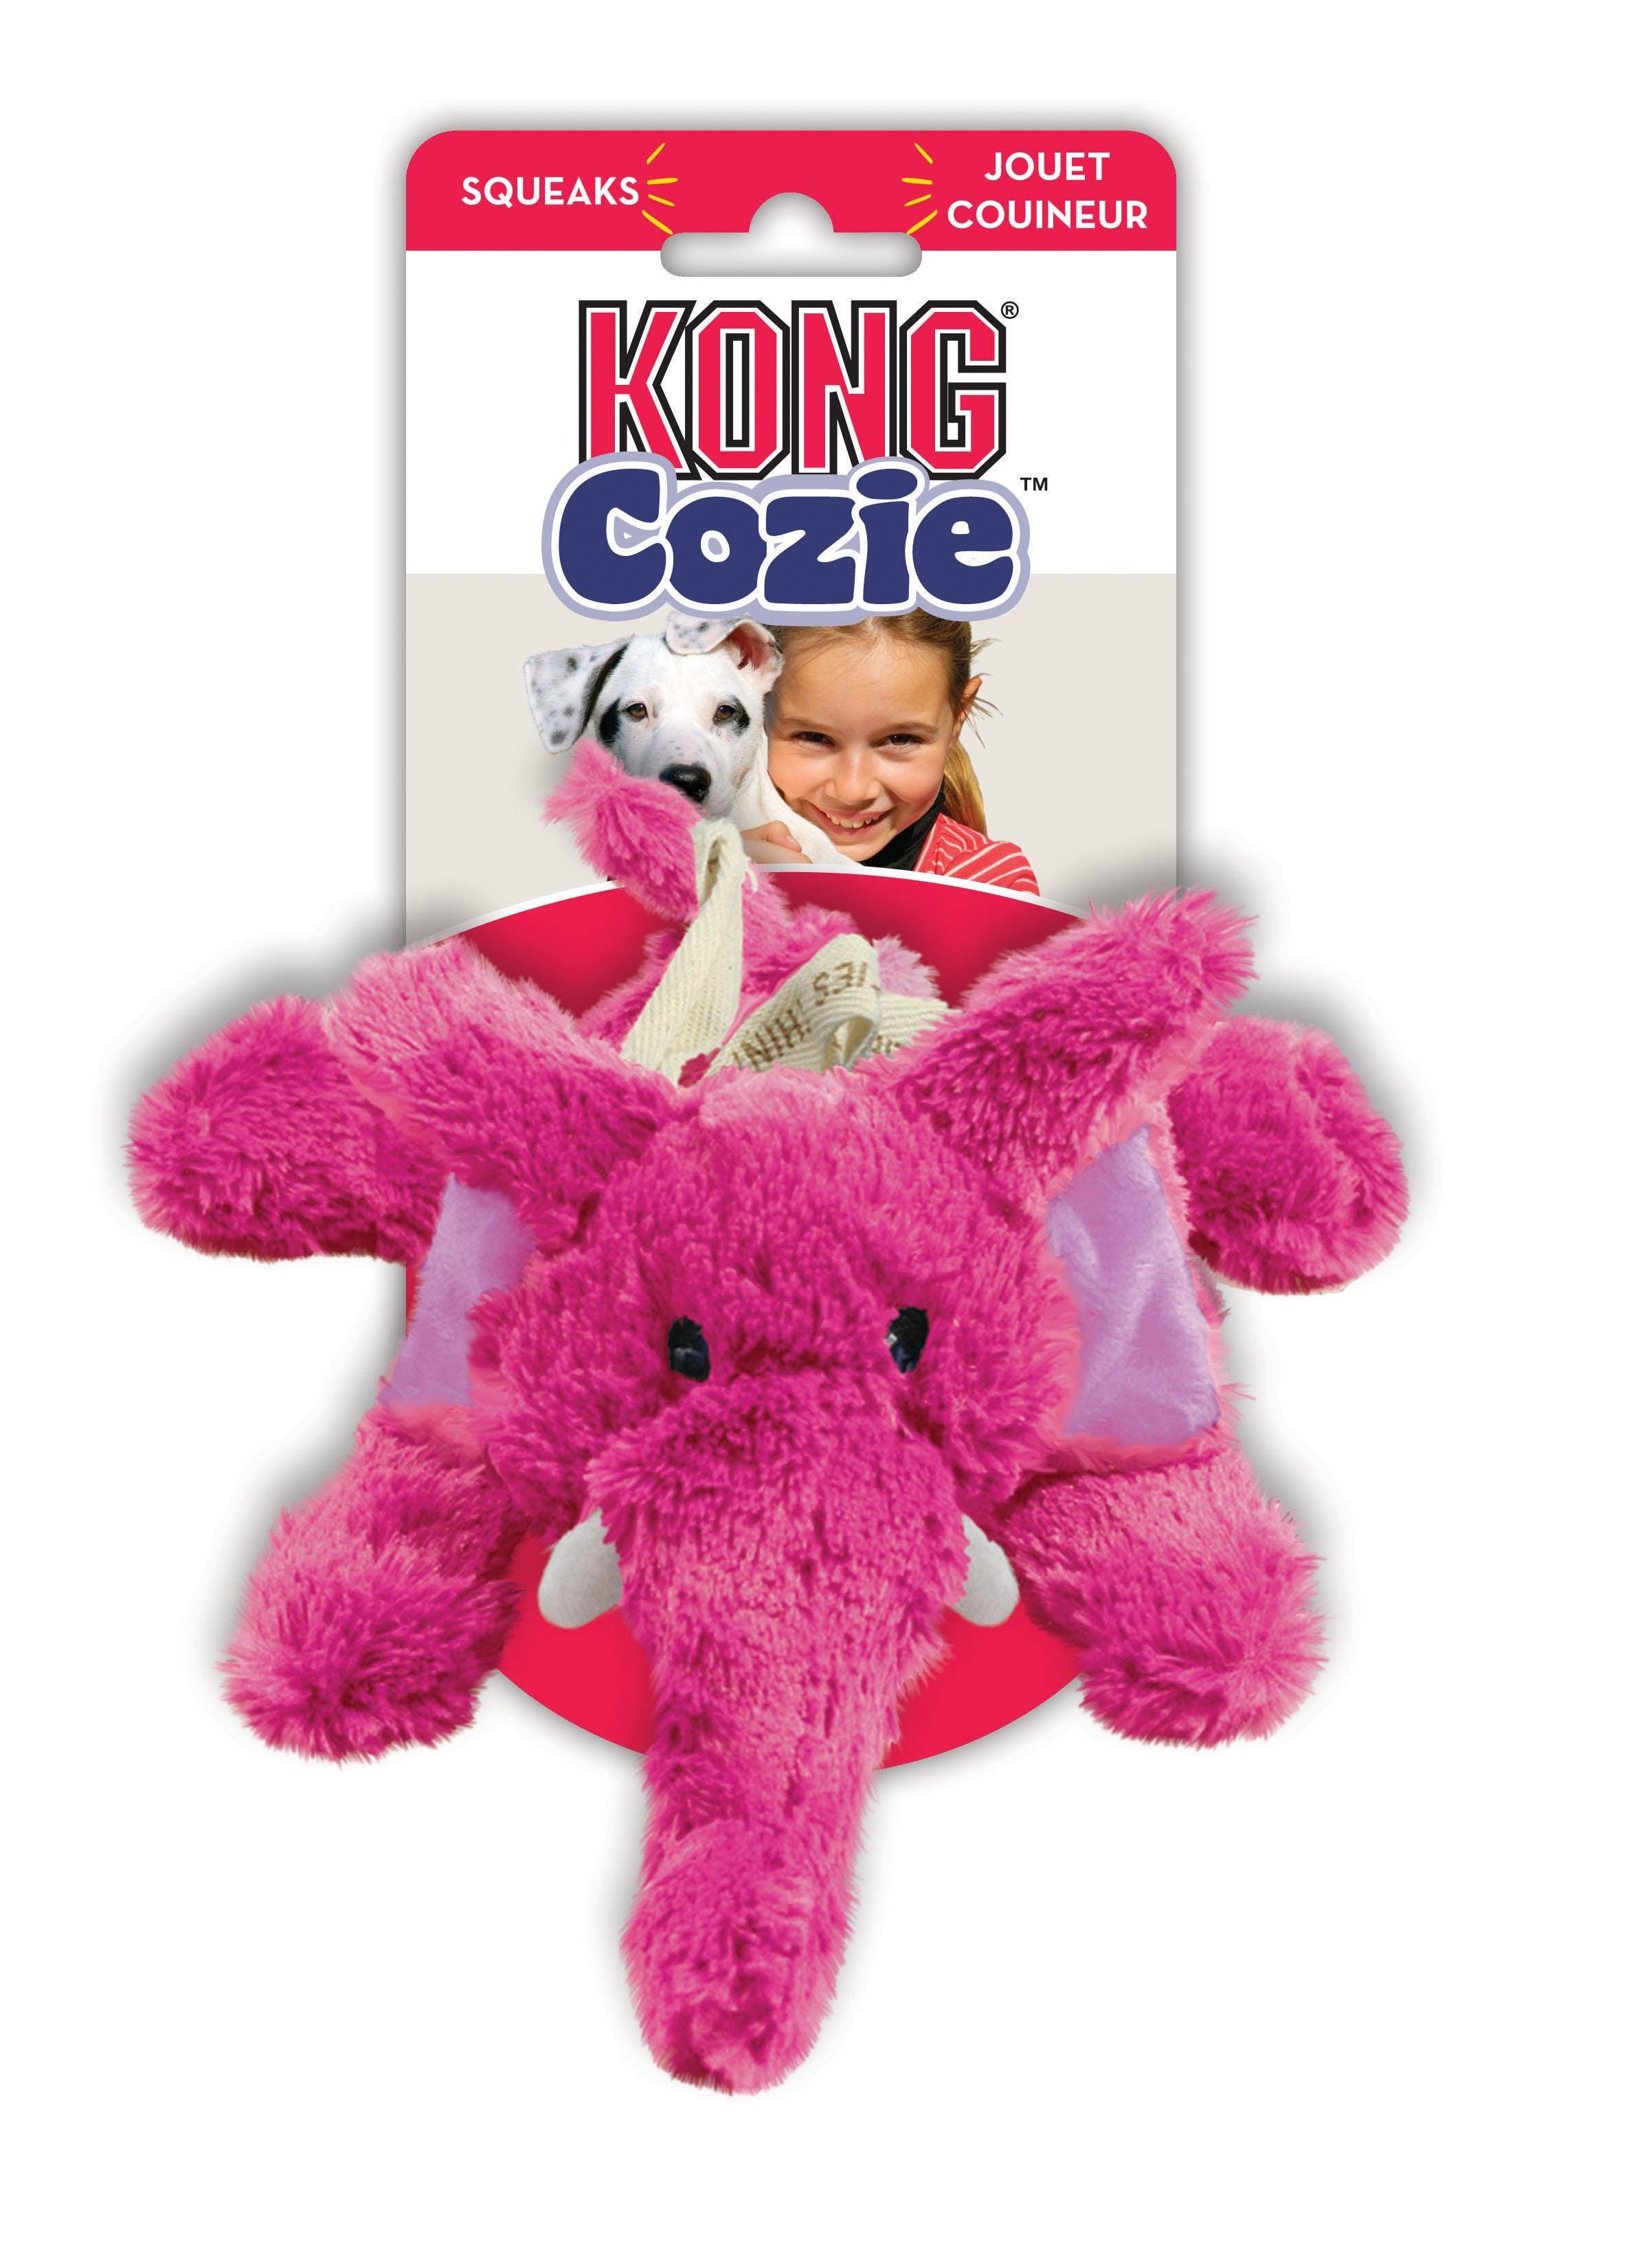 Kong Dog Squeaky Toy - Cozie Elmer The Elephant, Medium, Pink